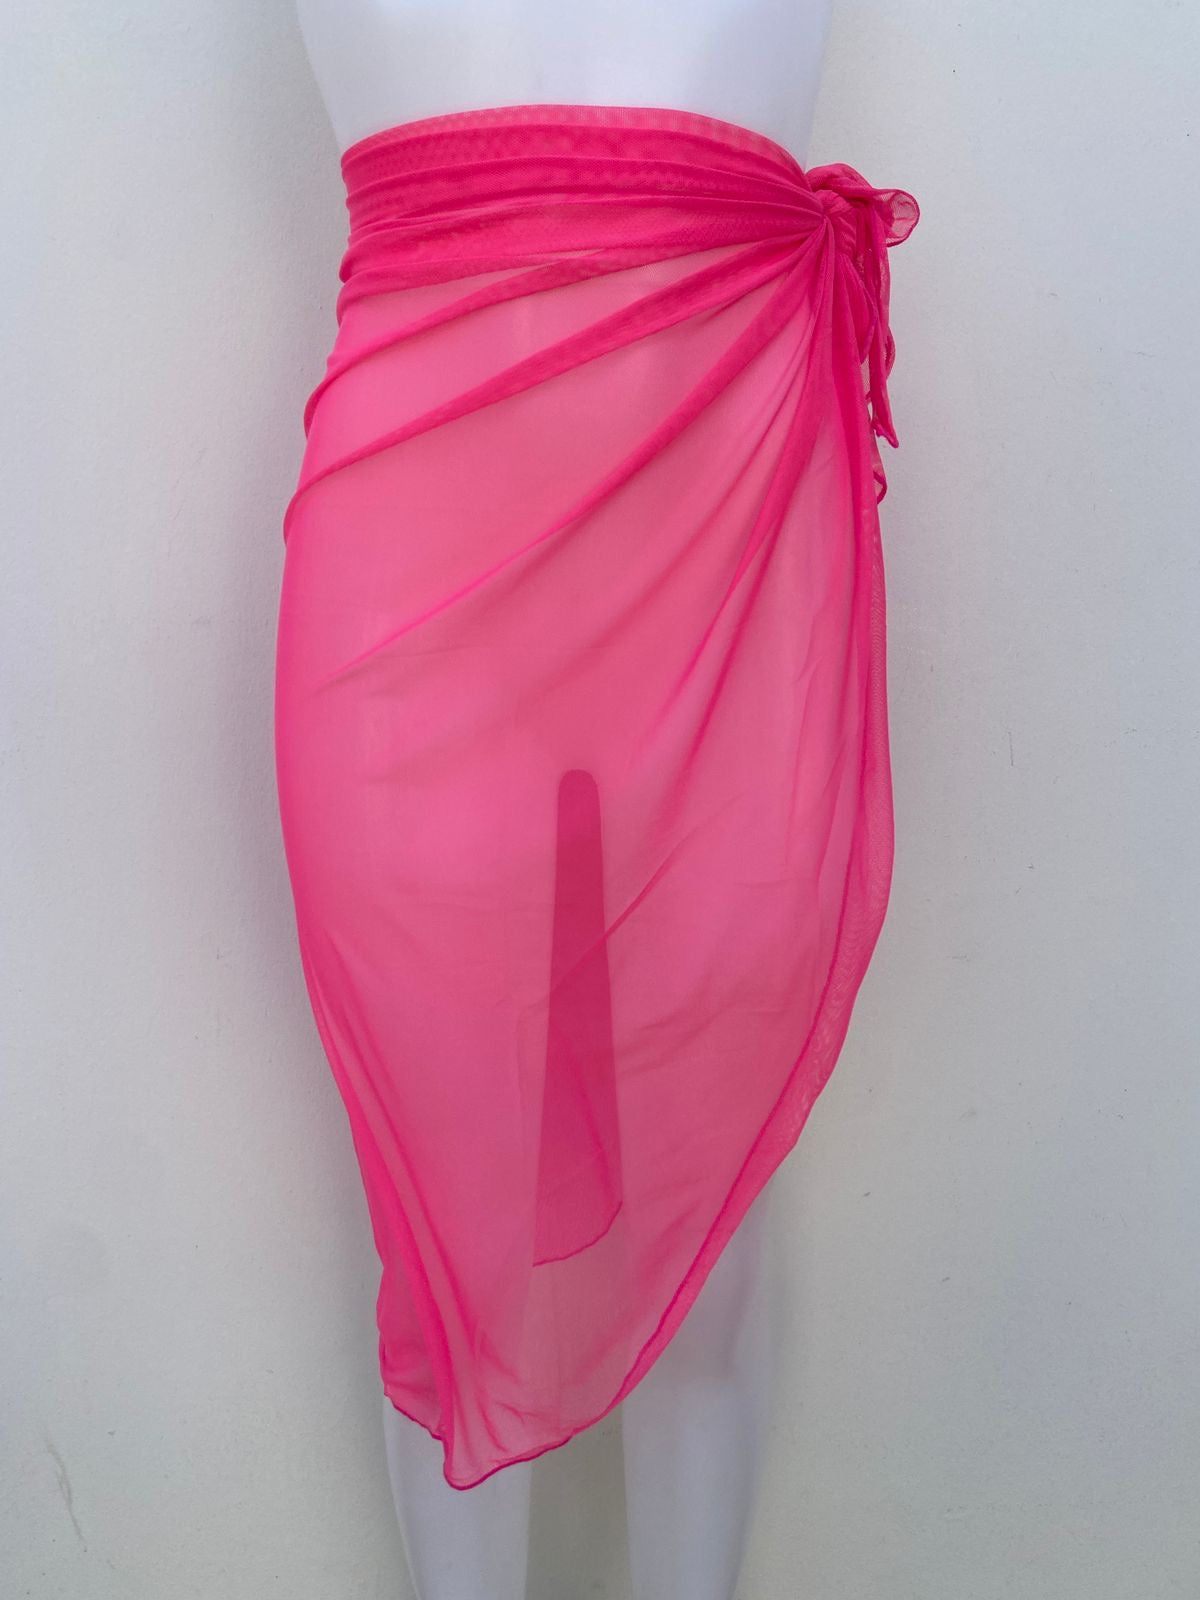 Falda/ Salida de playa Tini bikini original, rosada transparente, cover up.